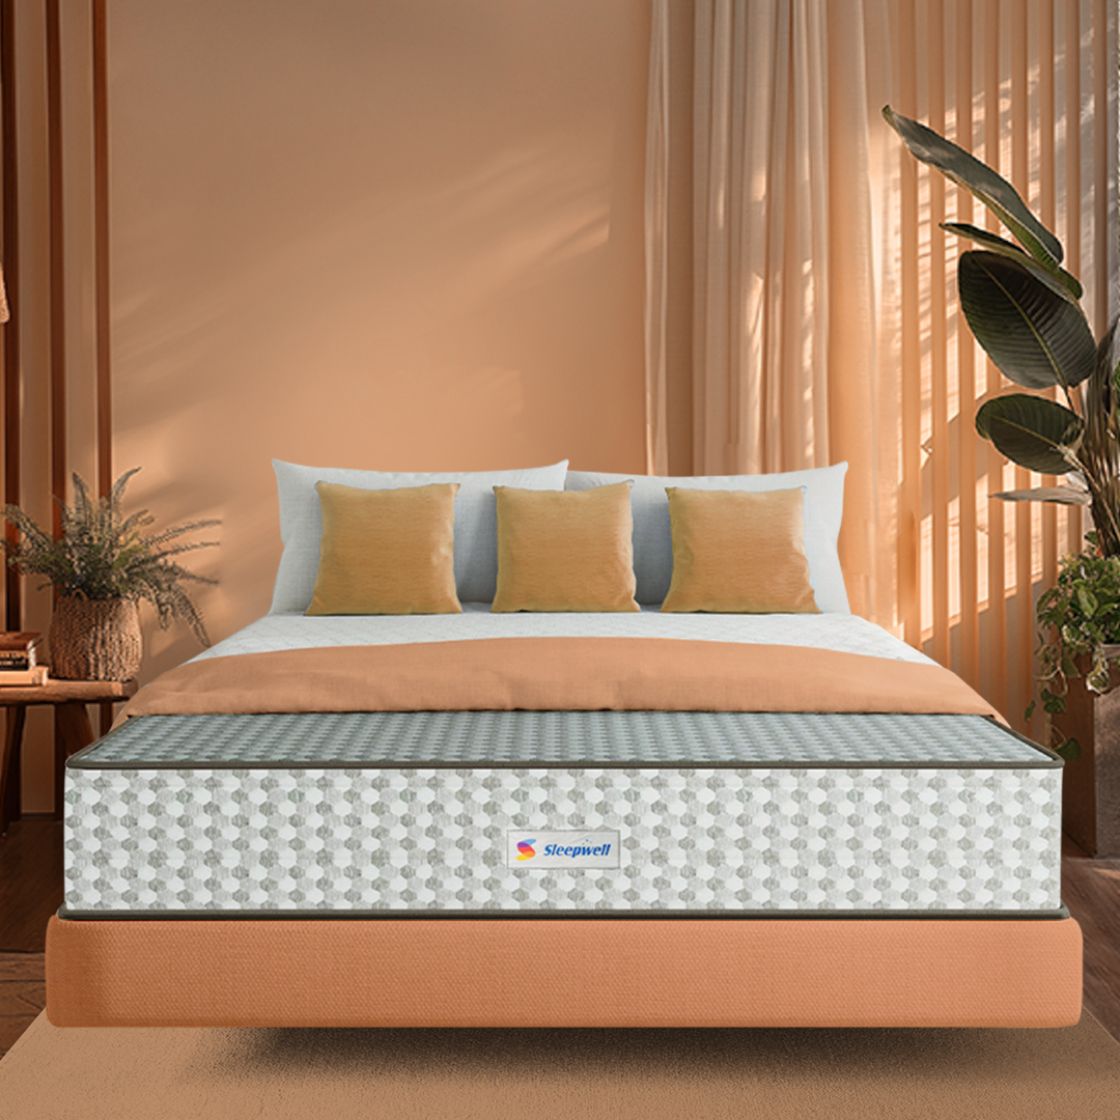 Sleepwell Dual PRO Profiled Foam Reversible 6-inch King Bed Size, Gentle and Firm, Triple Layered Anti Sag Foam Mattress (Grey, 84x70x6)